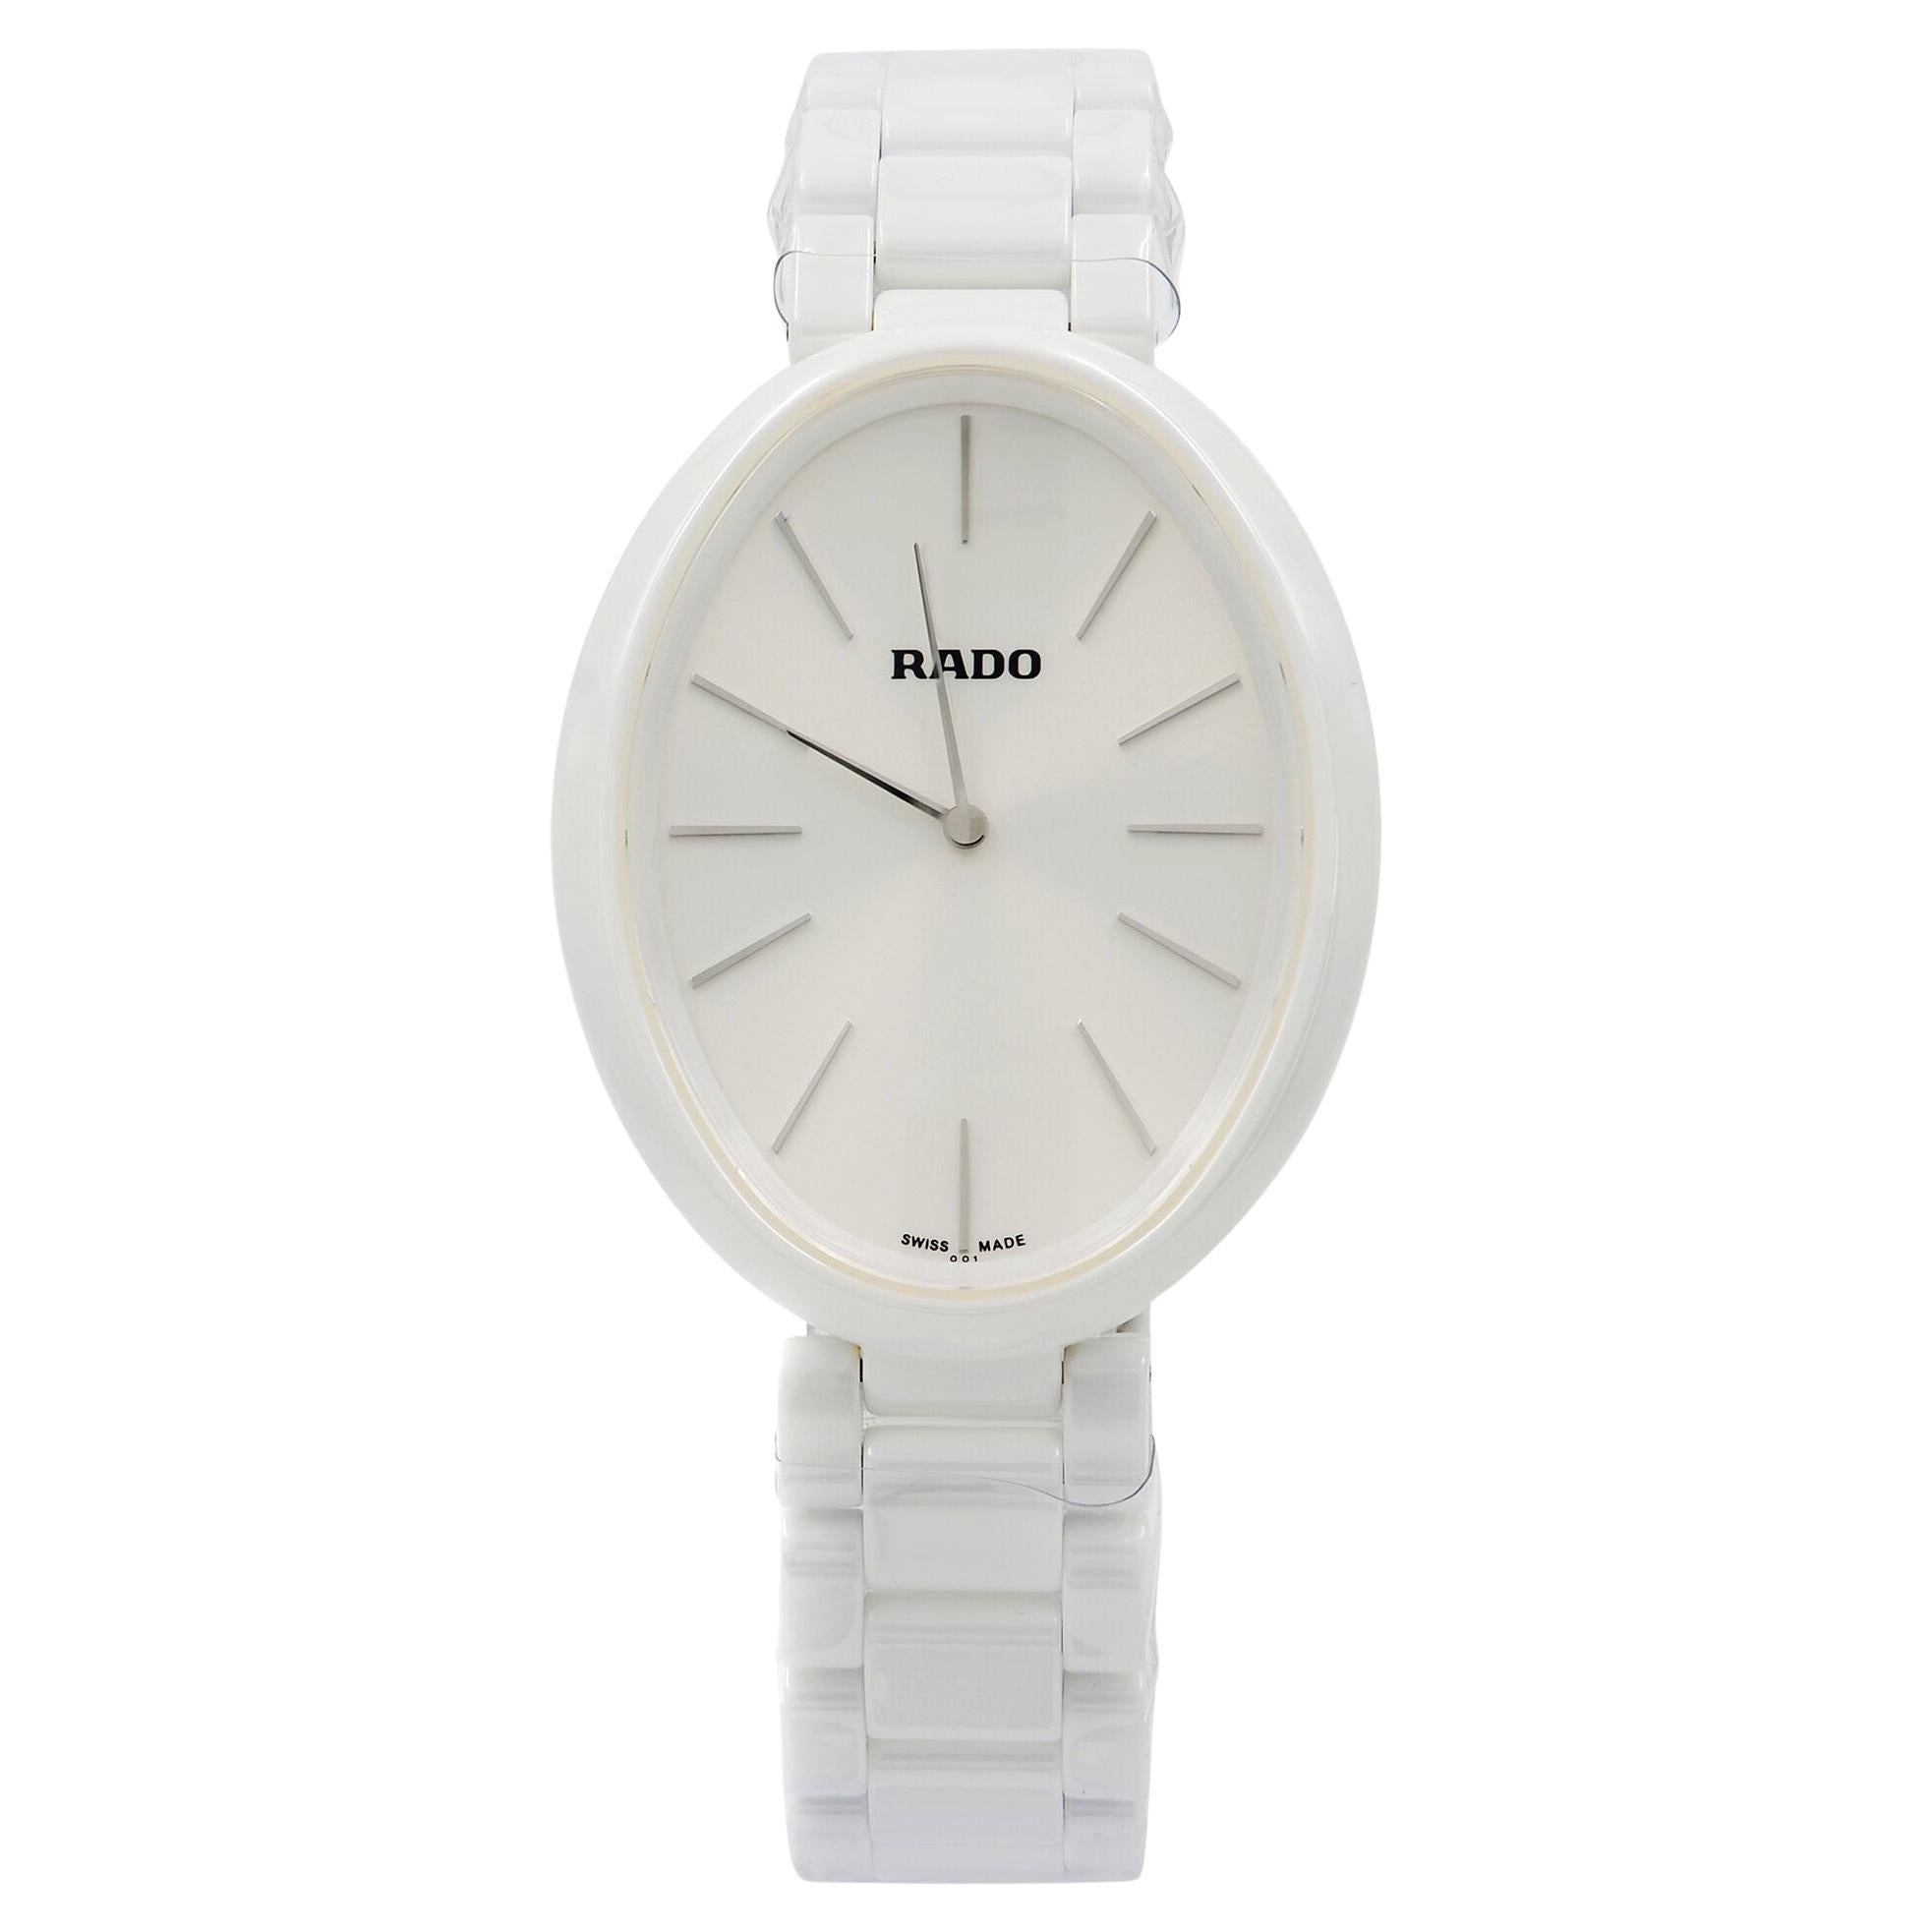 Rado Esenza White Ceramic White Dial Ladies Quartz Watch R53092012 For Sale